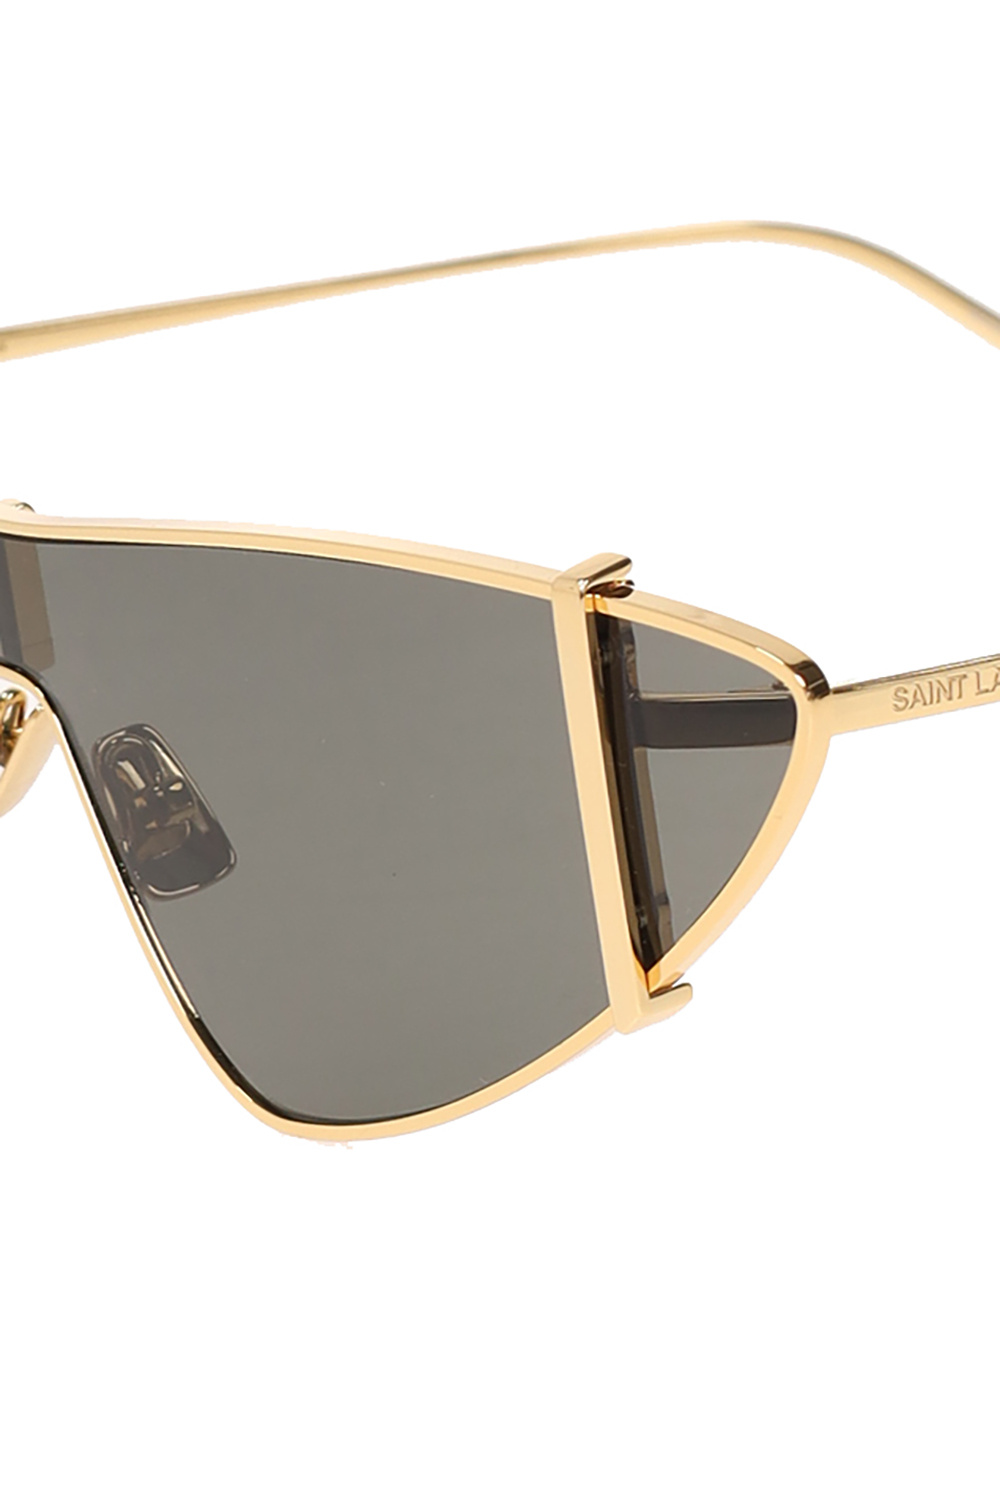 SL 536' sunglasses Saint Laurent - persol round frame 